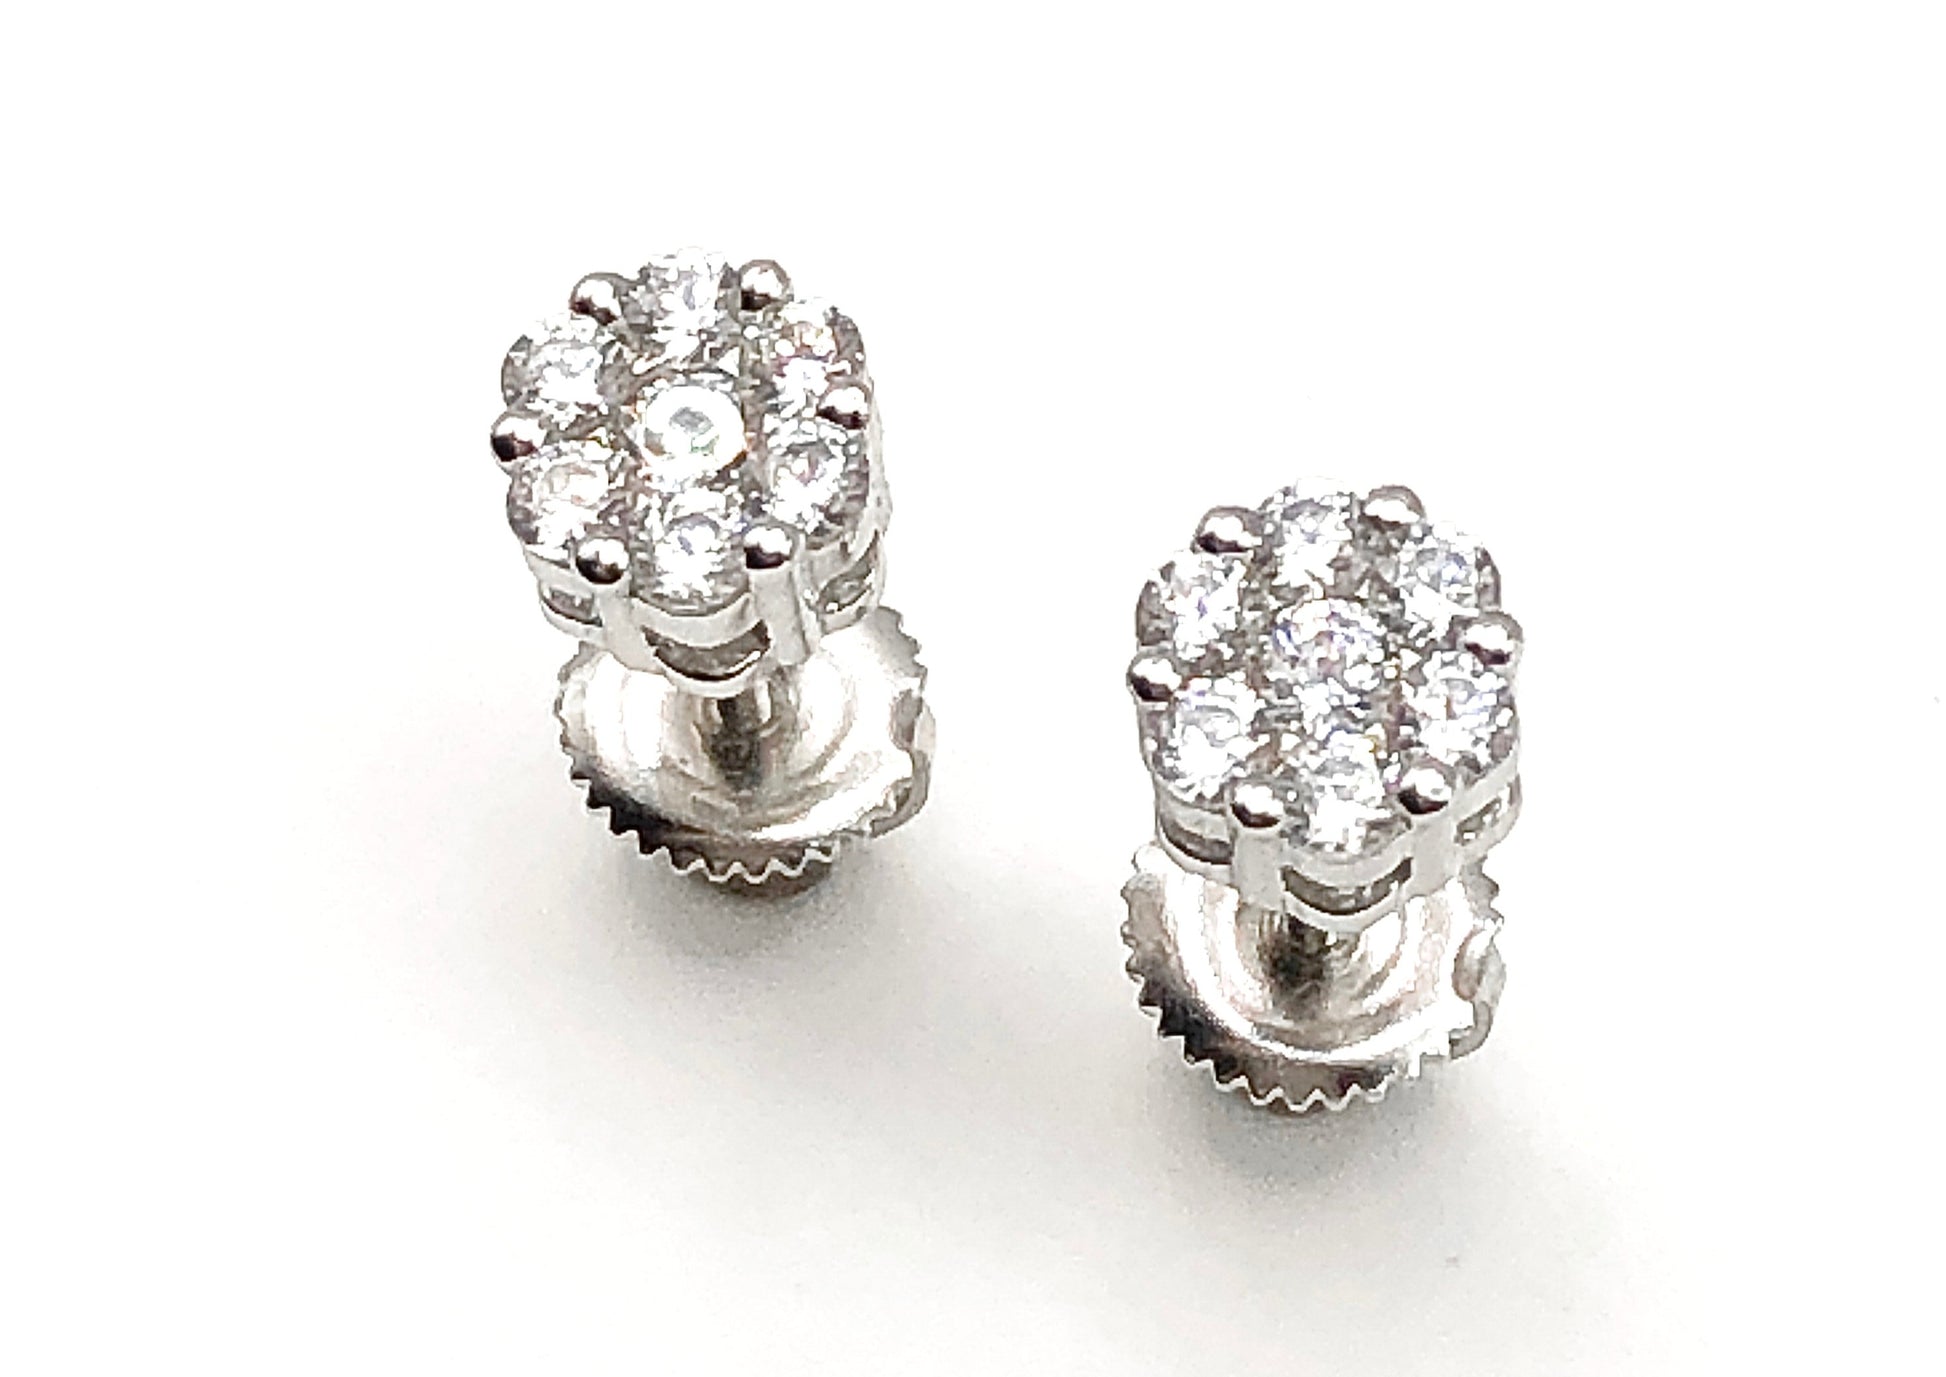 Earrings - Sterling Silver Sparkly CZ Cluster Stud Earrings